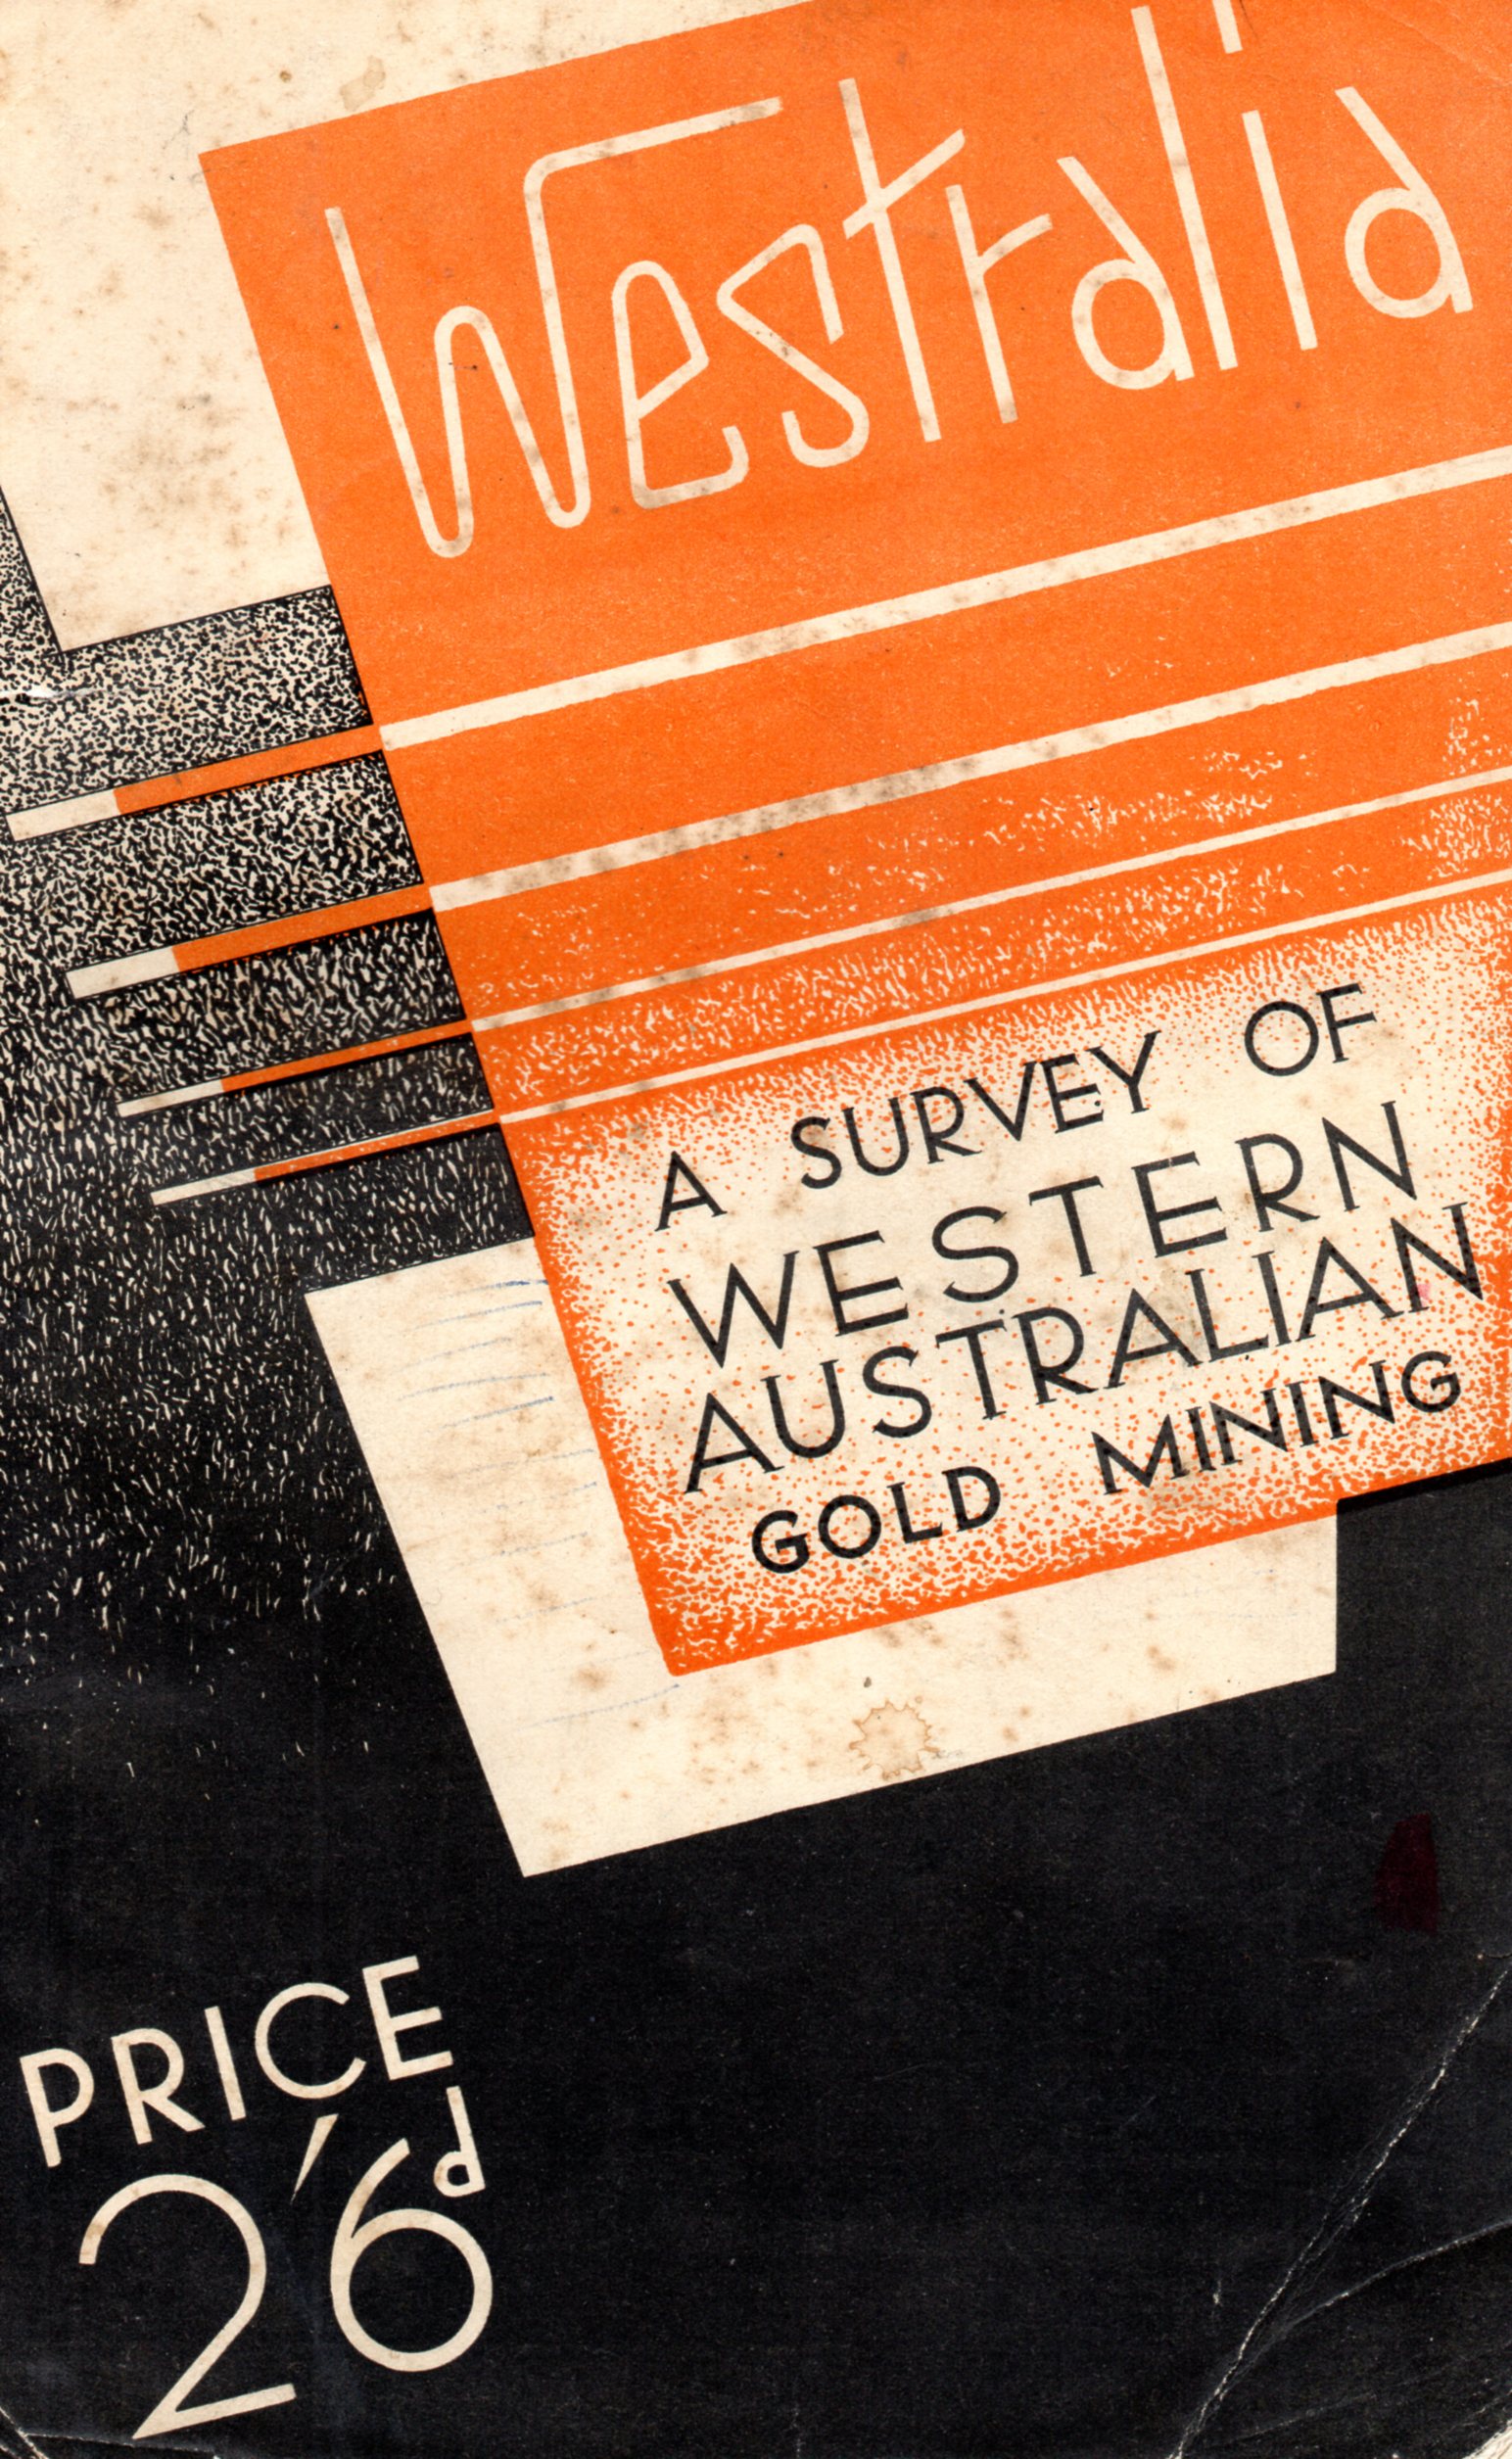 [USED] Westralia - A Survey of Western Australian Gold Mining